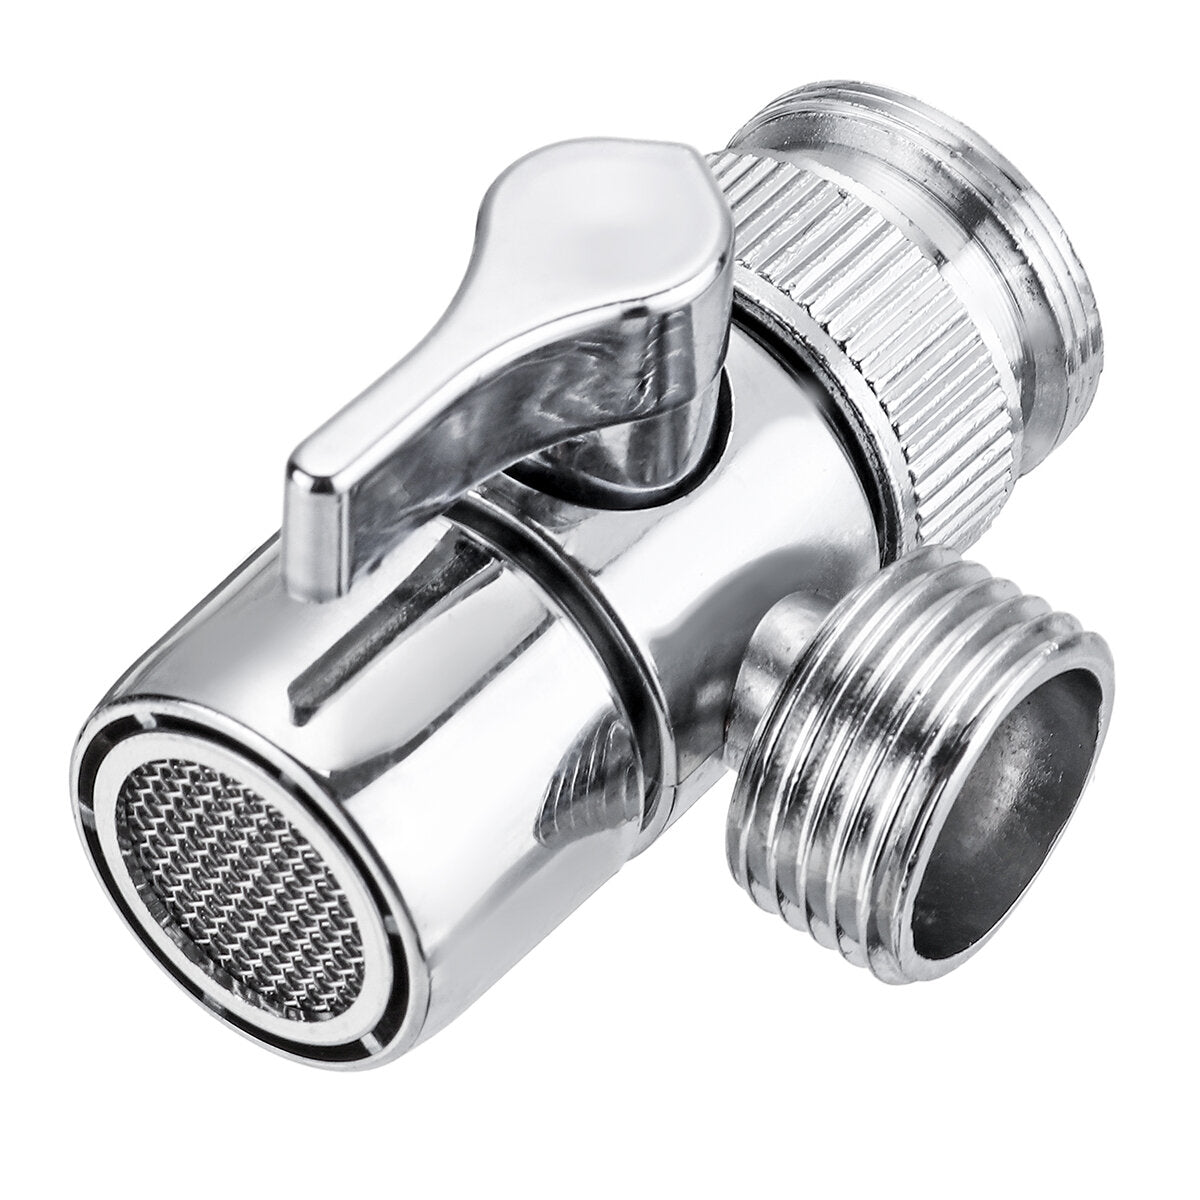 Bathroom Basin Tap External Hand Shower Faucet Nozzle Bathroom Supplies Quick Connect Sink Hose Sprayer Set